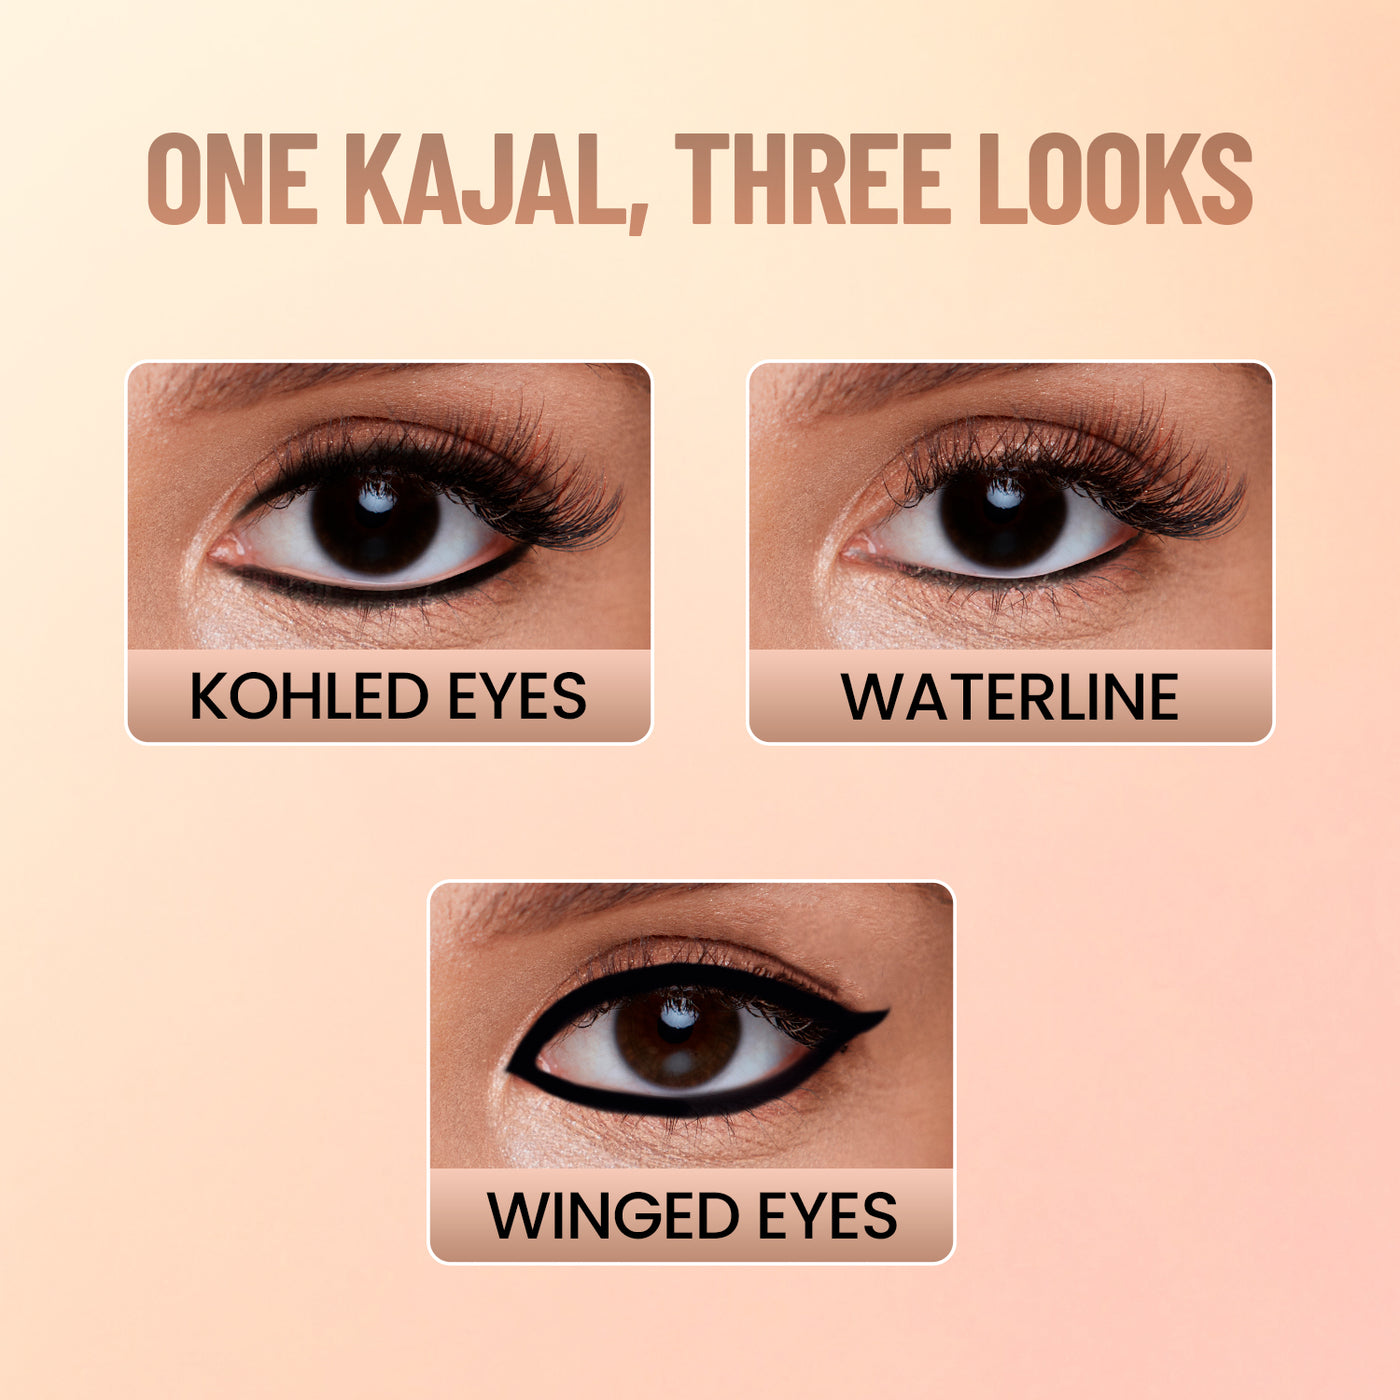 You & Eye Power Black Kajal